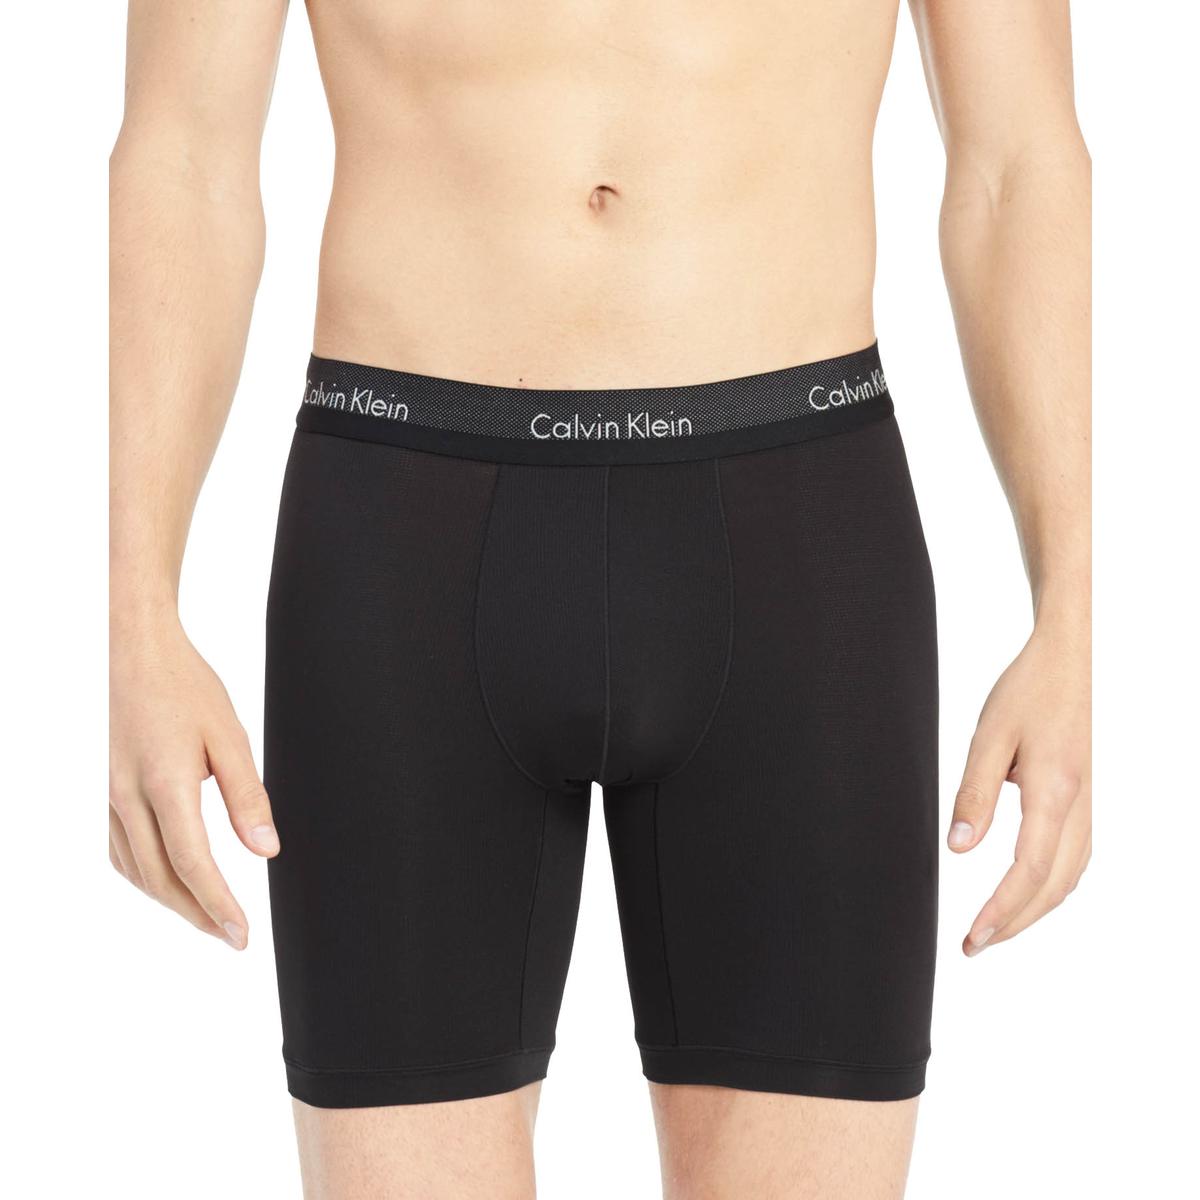 Calvin Klein Mens Black Logo Underwear Long Boxer Brief S 36-38 BHFO ...